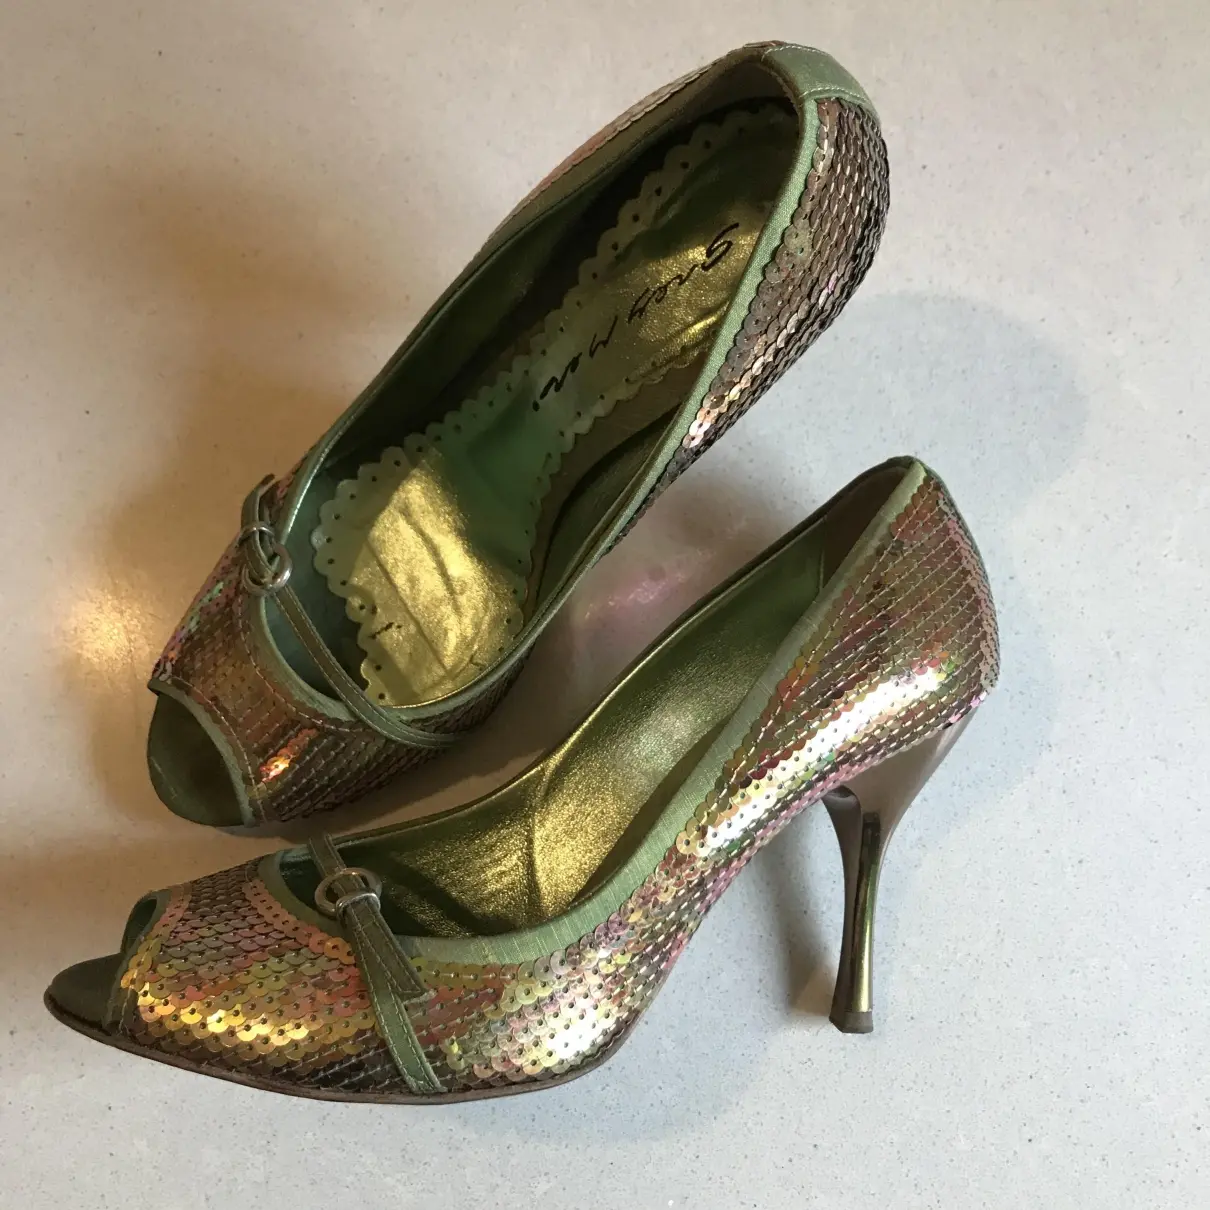 Buy Greymer Glitter heels online